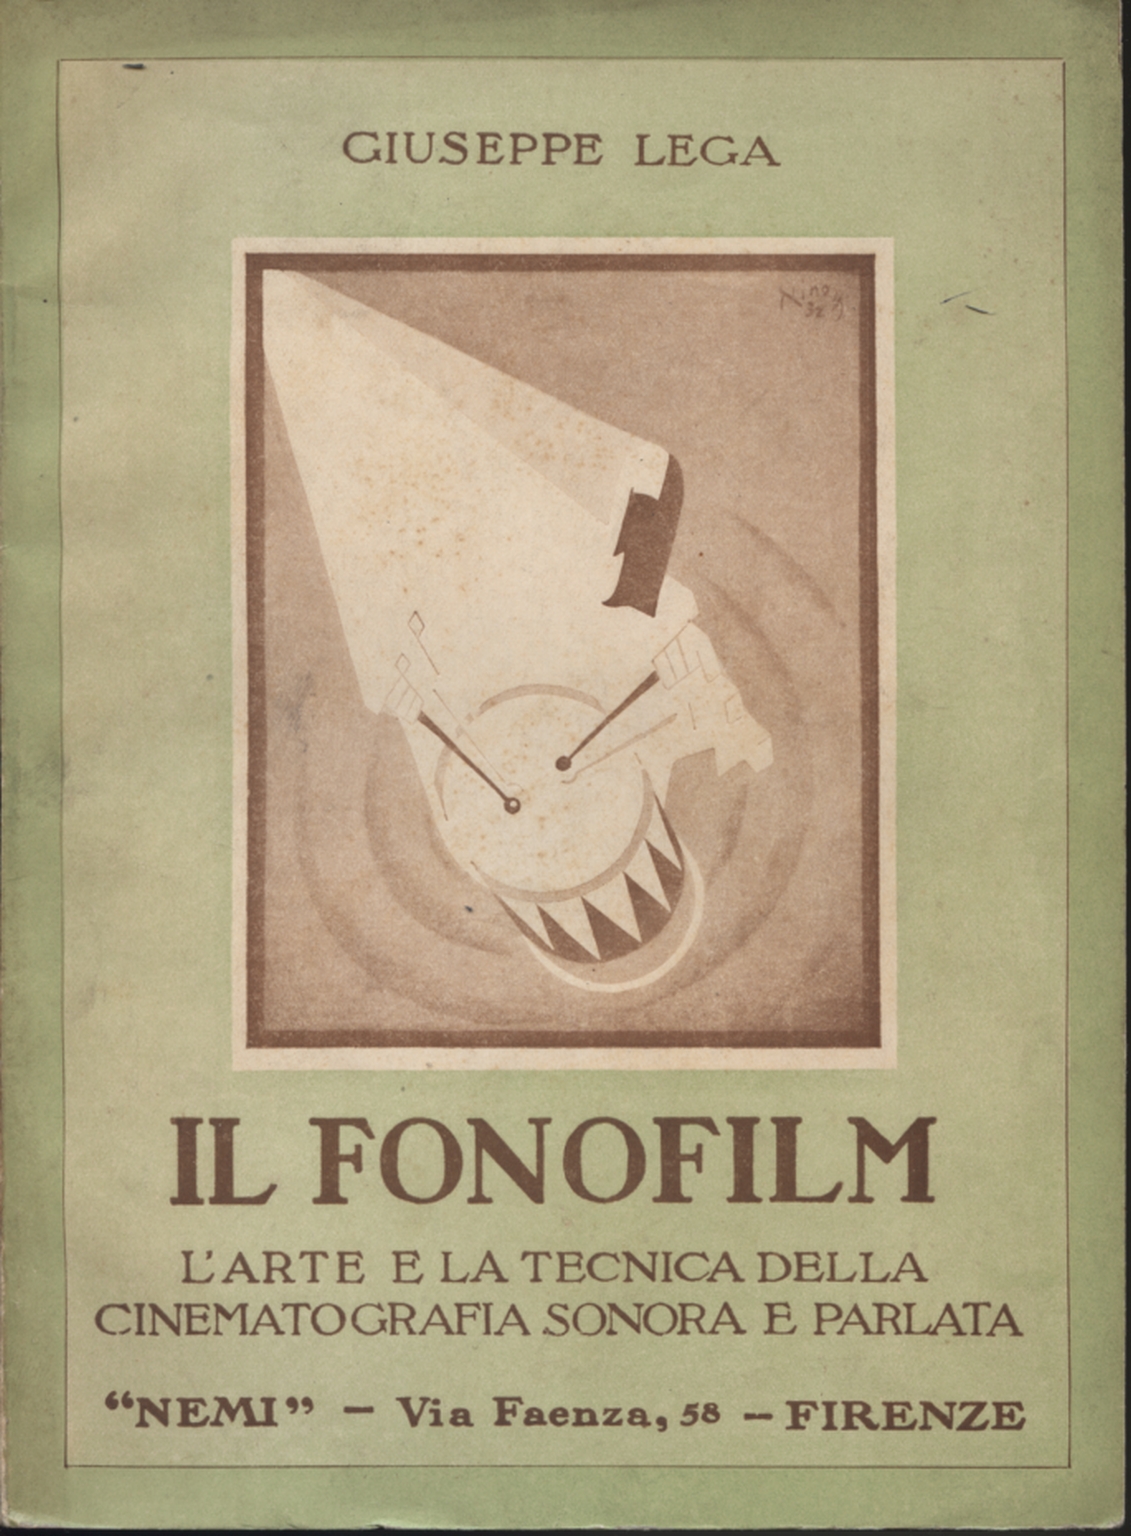 Der Phonofilm, Giuseppe Lega